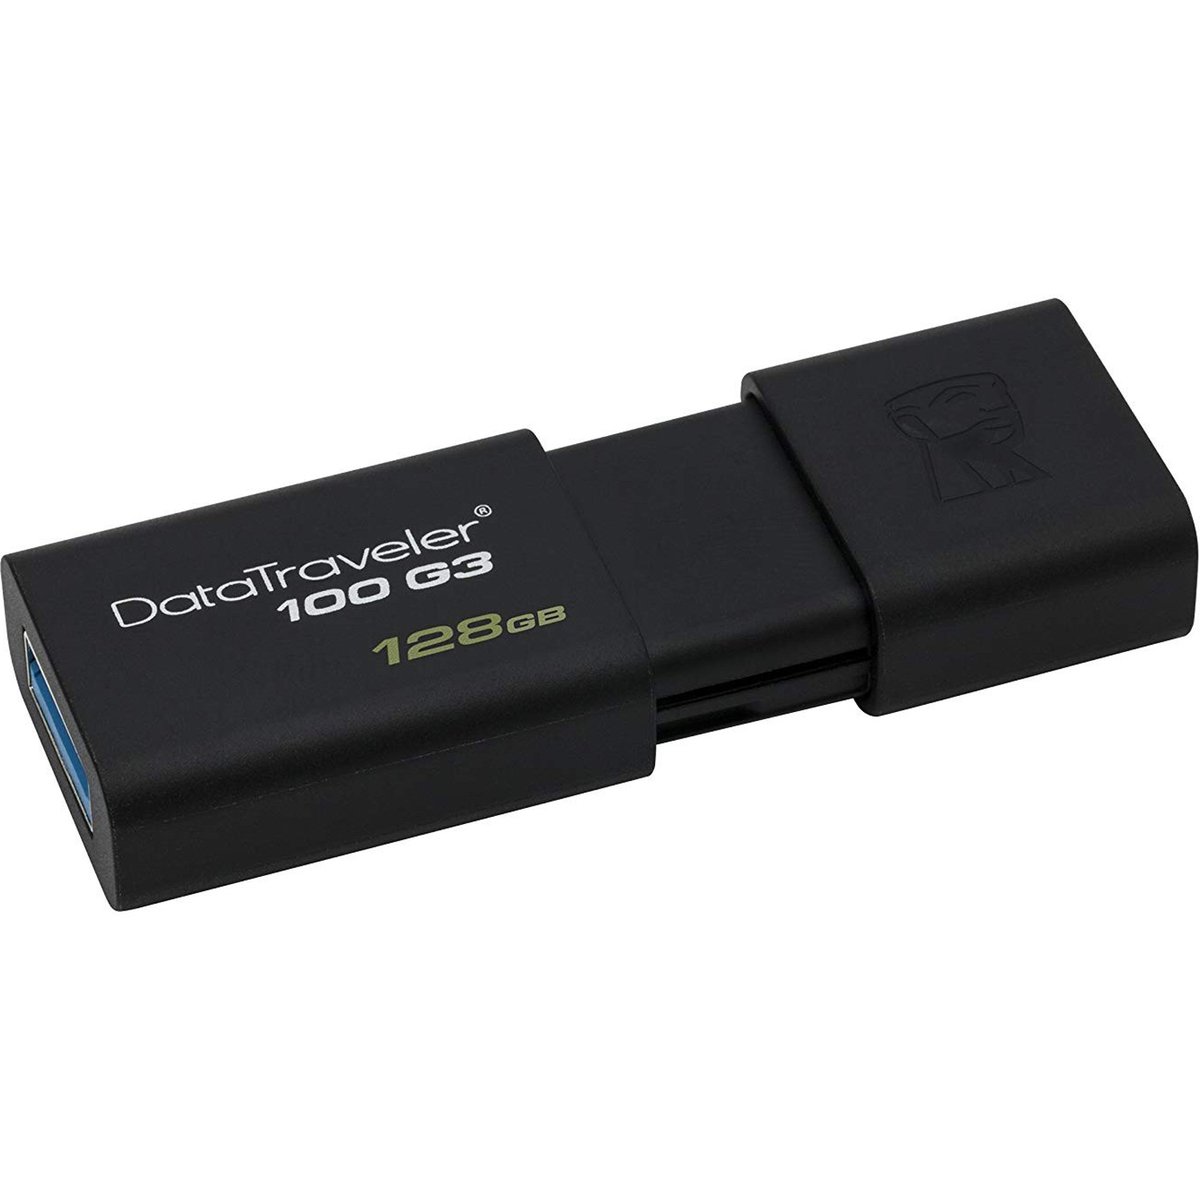 Kingston Flash Drive DT100G3 128GB